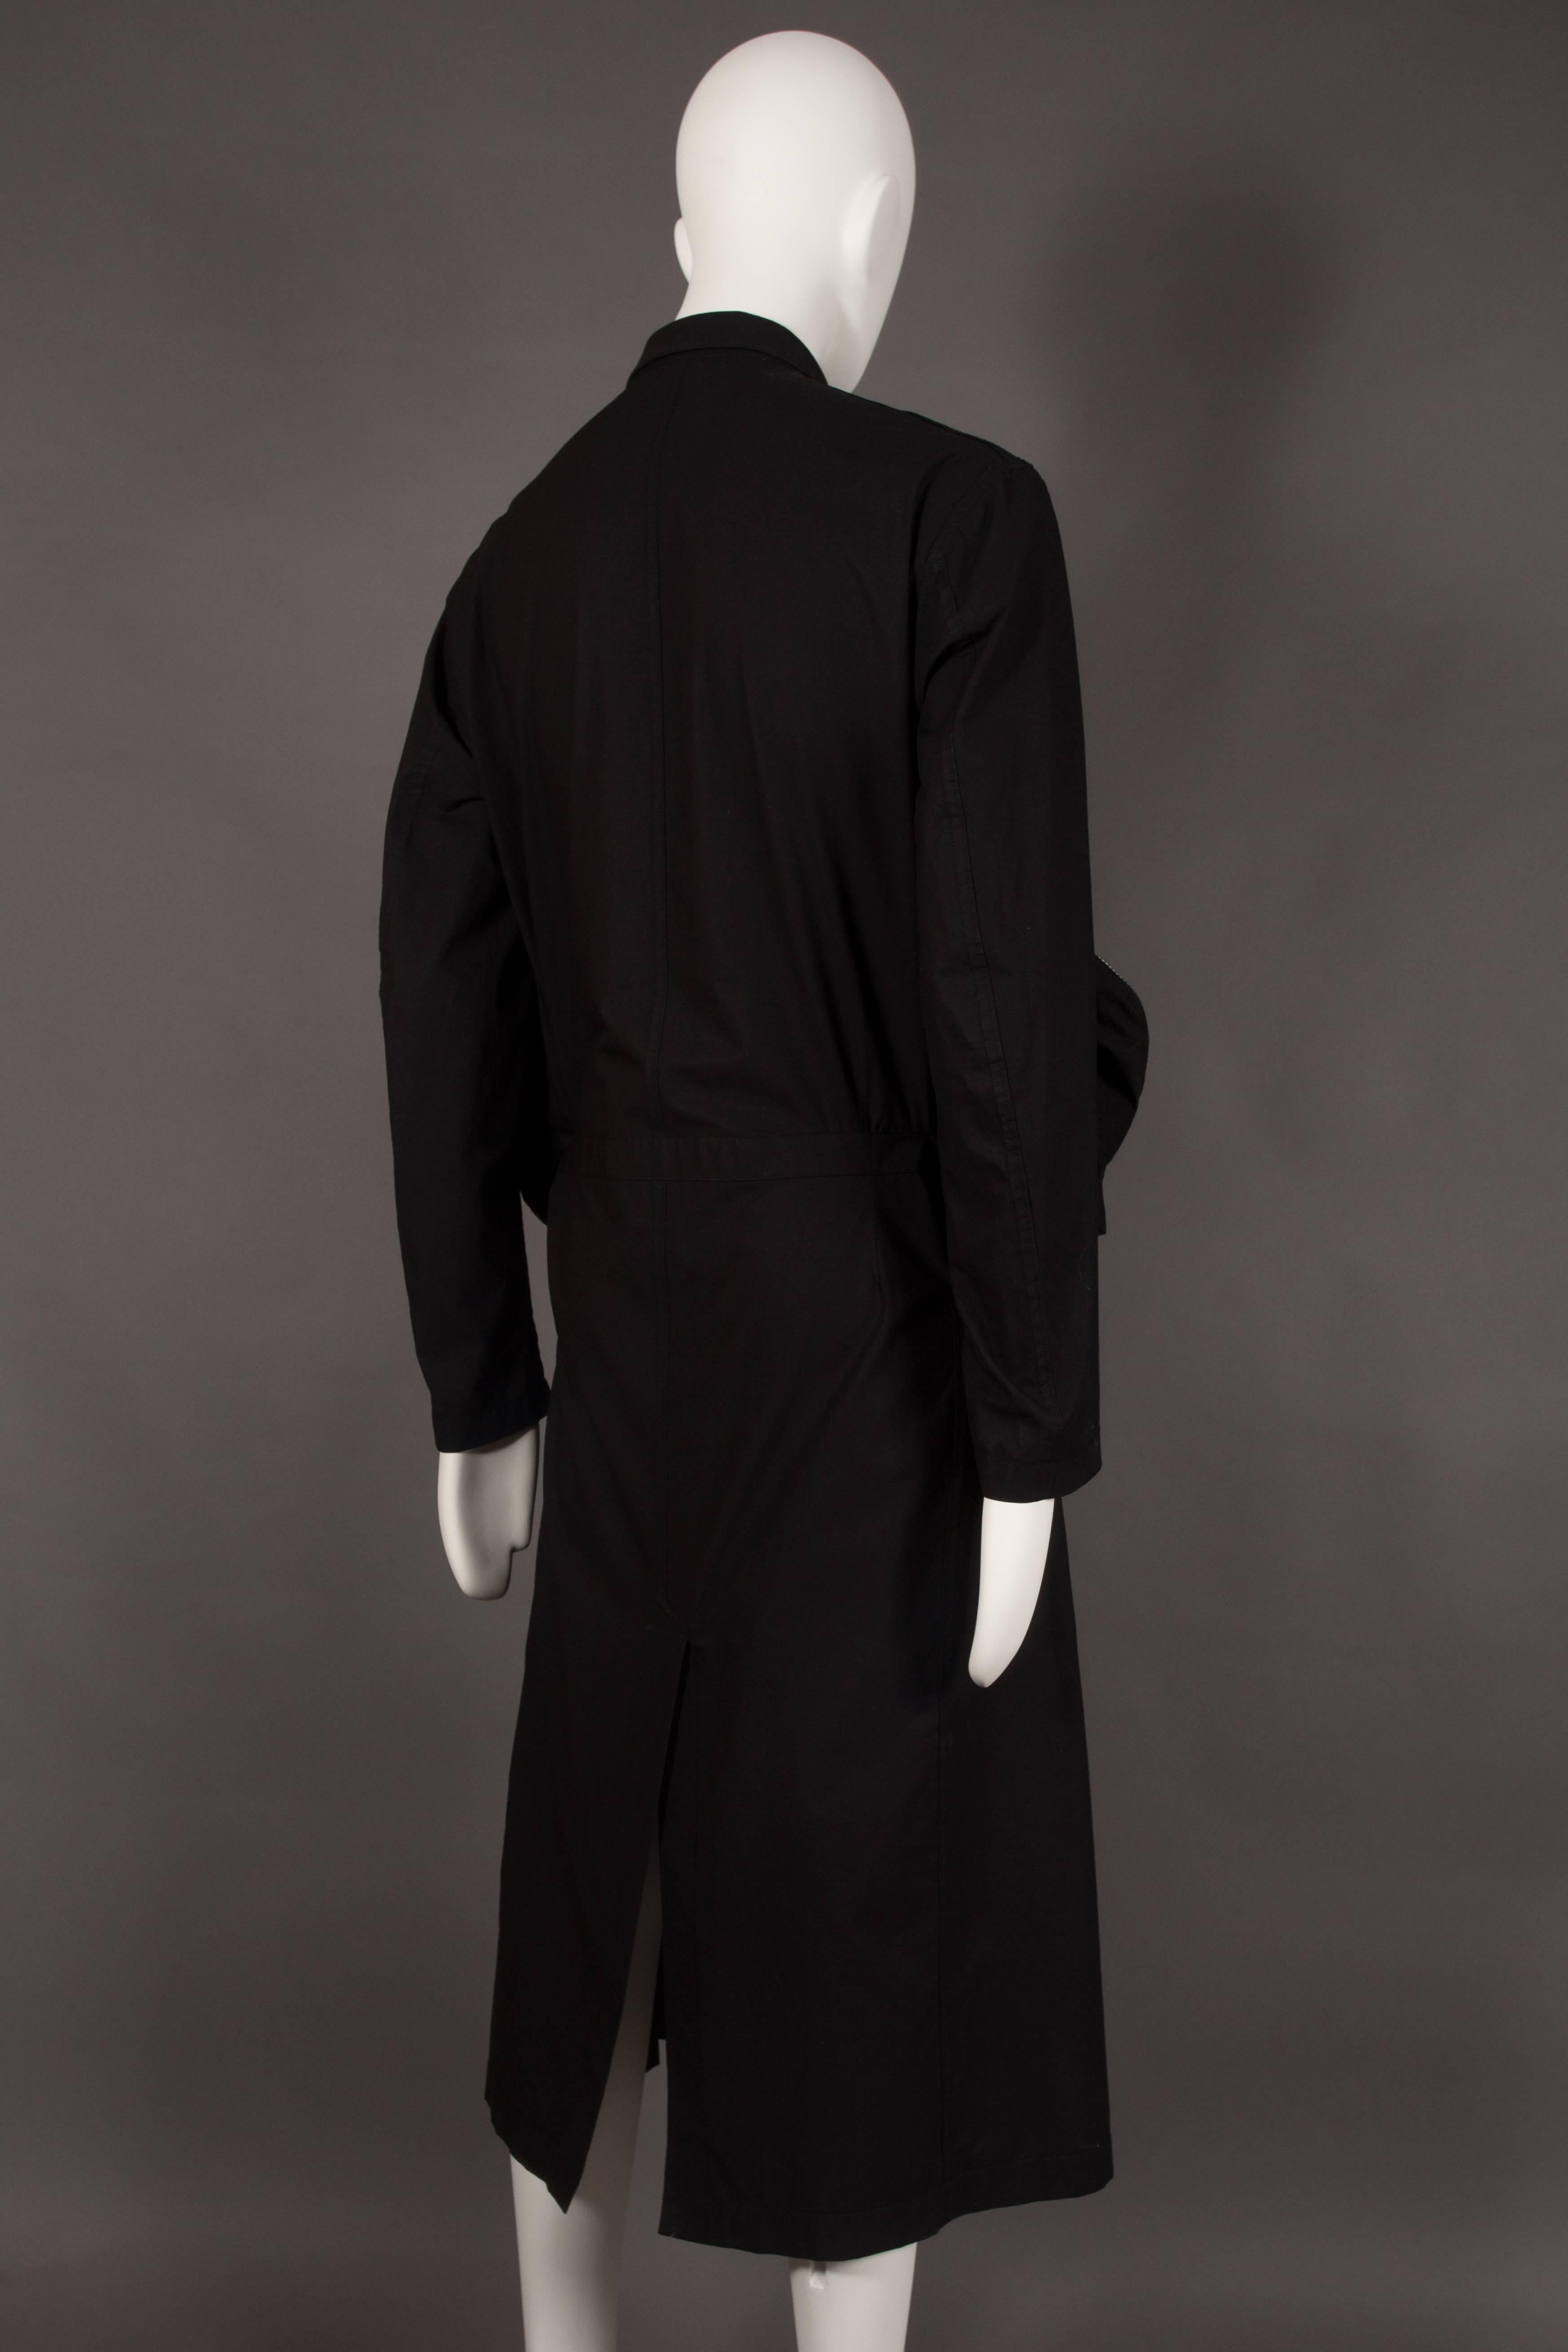 Yohji Yamamoto POUR HOMME black oversized multi-pocket military coat, circa 2006 1